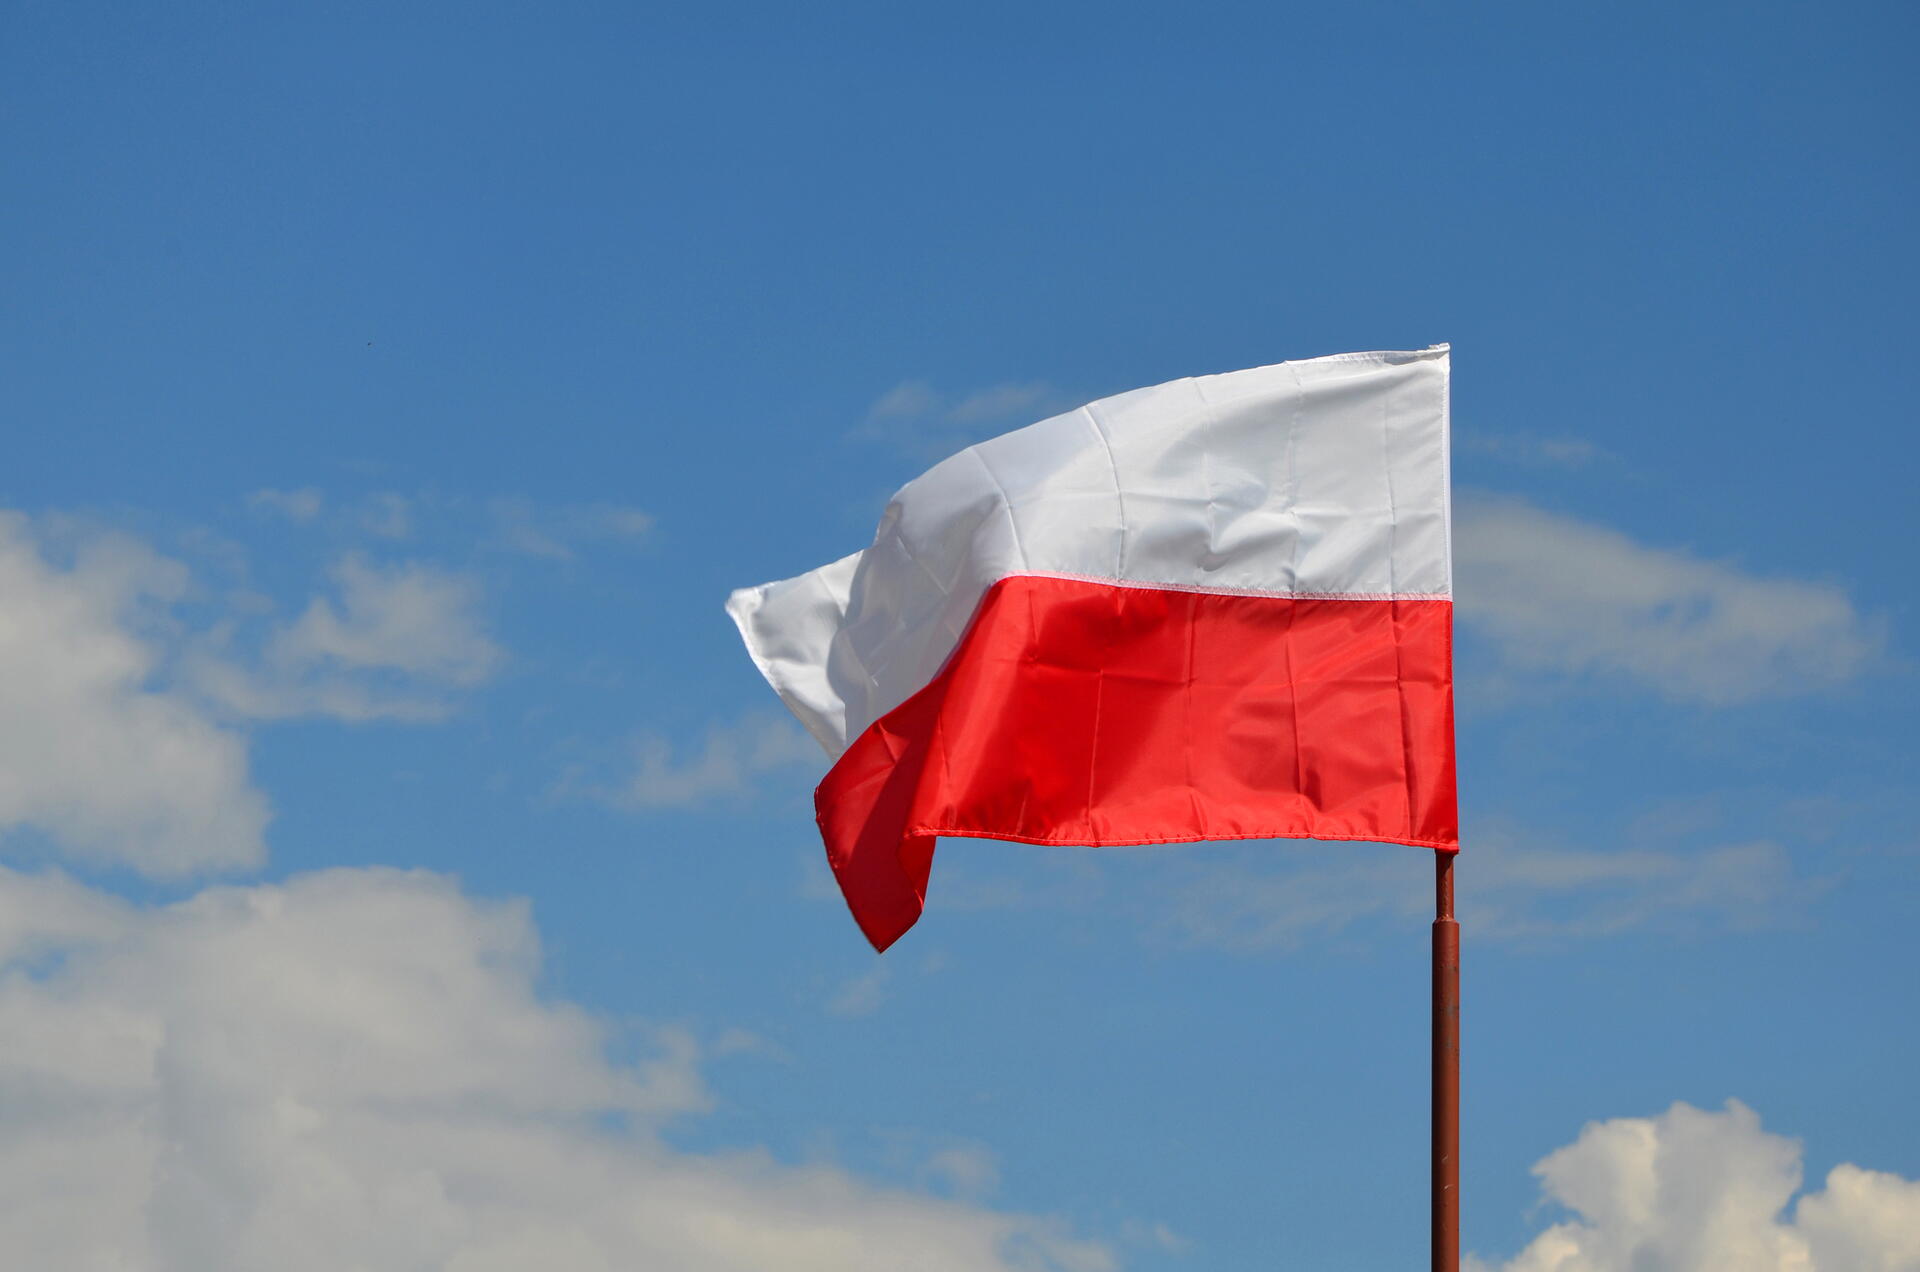 Mýtné v Polsku: Kolik za něj letos letos zaplatíte?